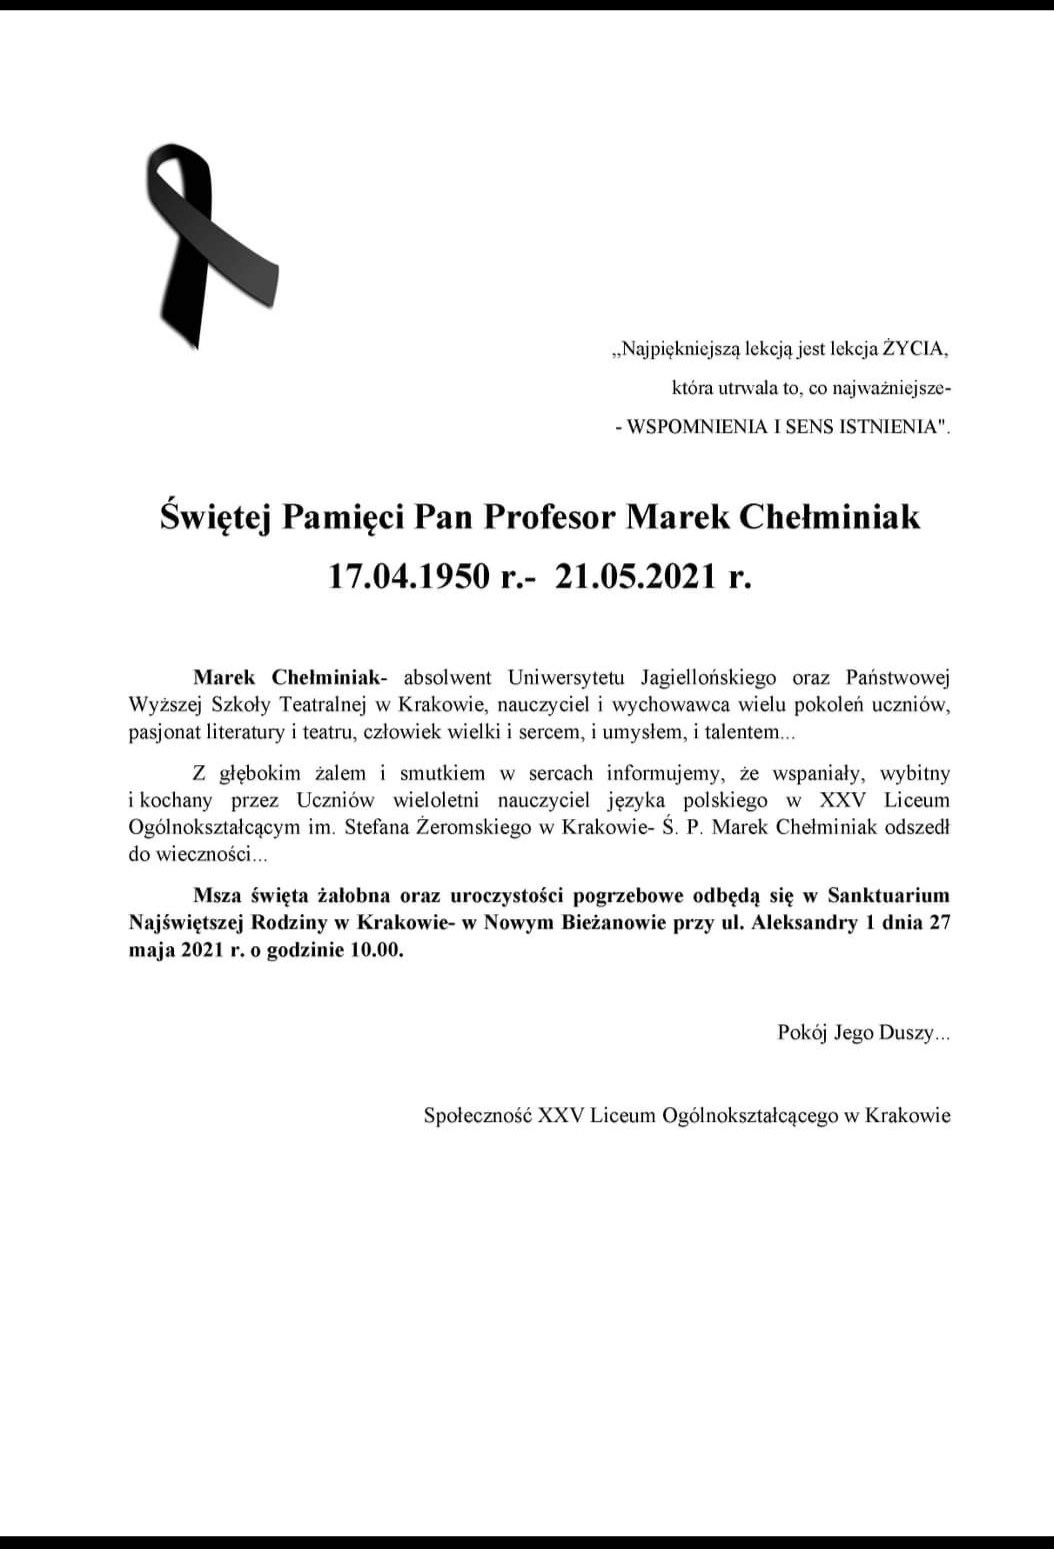 Świętej Pamięci Pan Profesor Marek Chełminiak